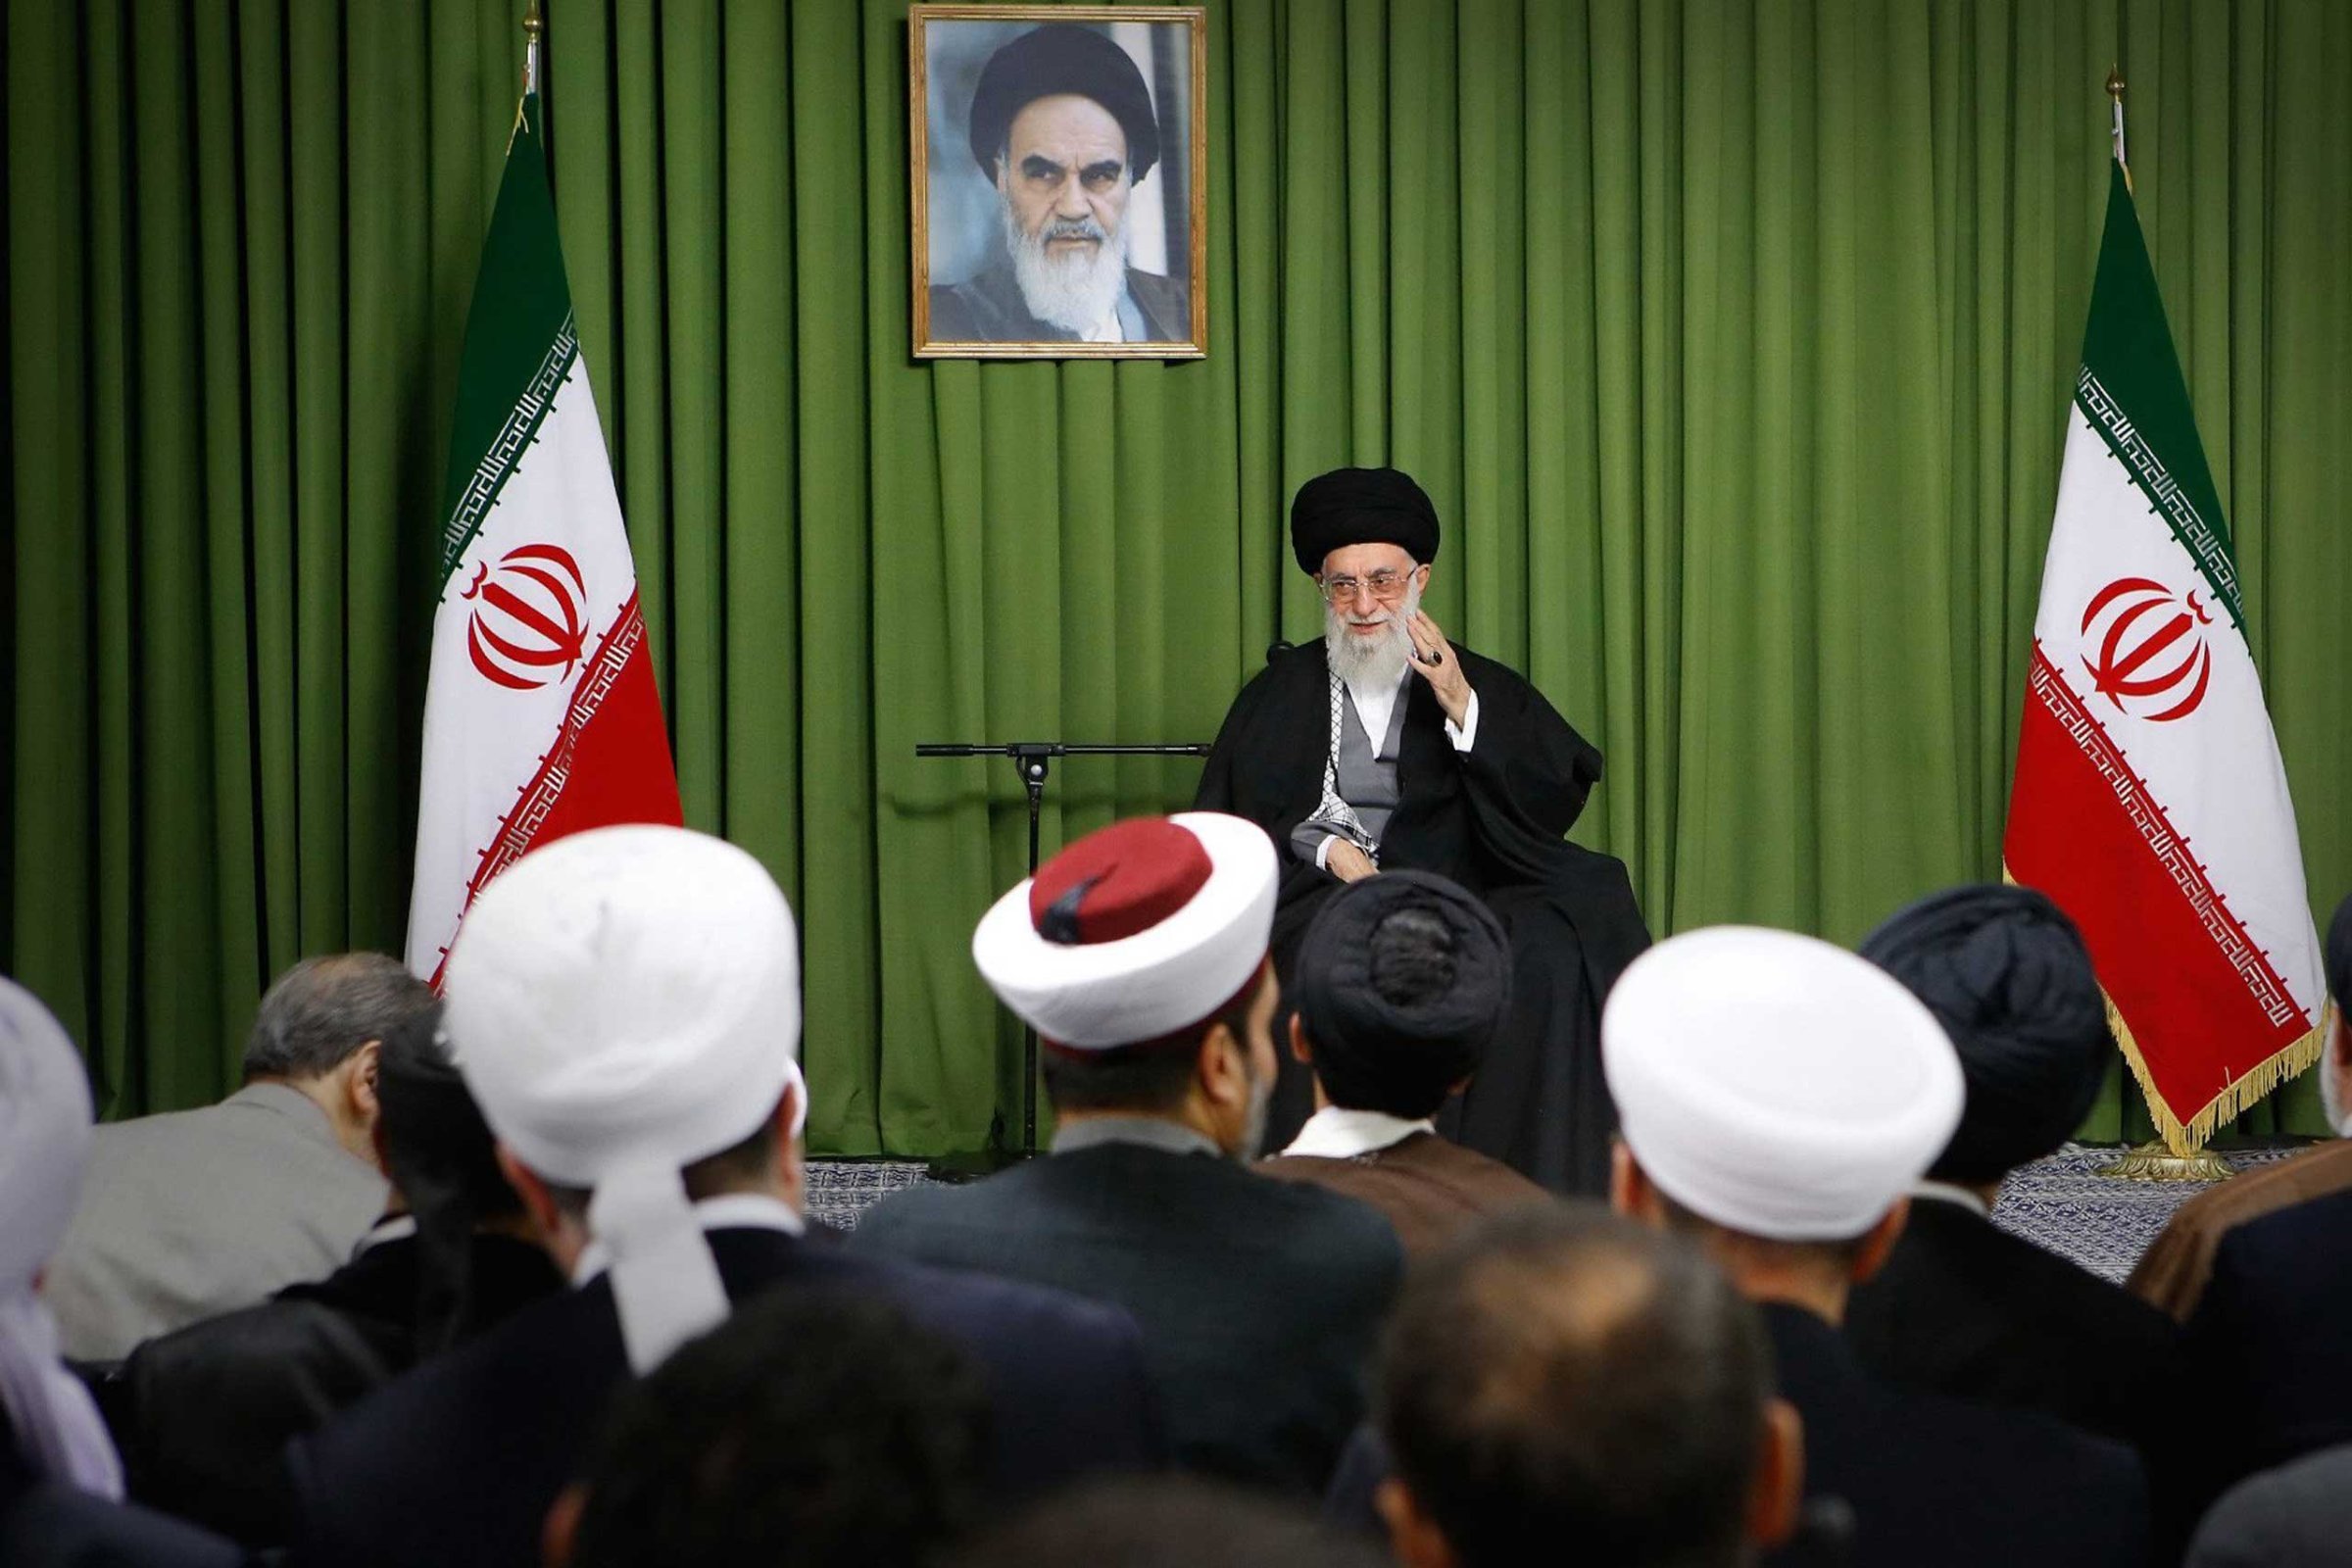 Supreme leader Ayatollah Ali Khamenei speaks during a ceremony in Tehran, Nov. 25, 2014.